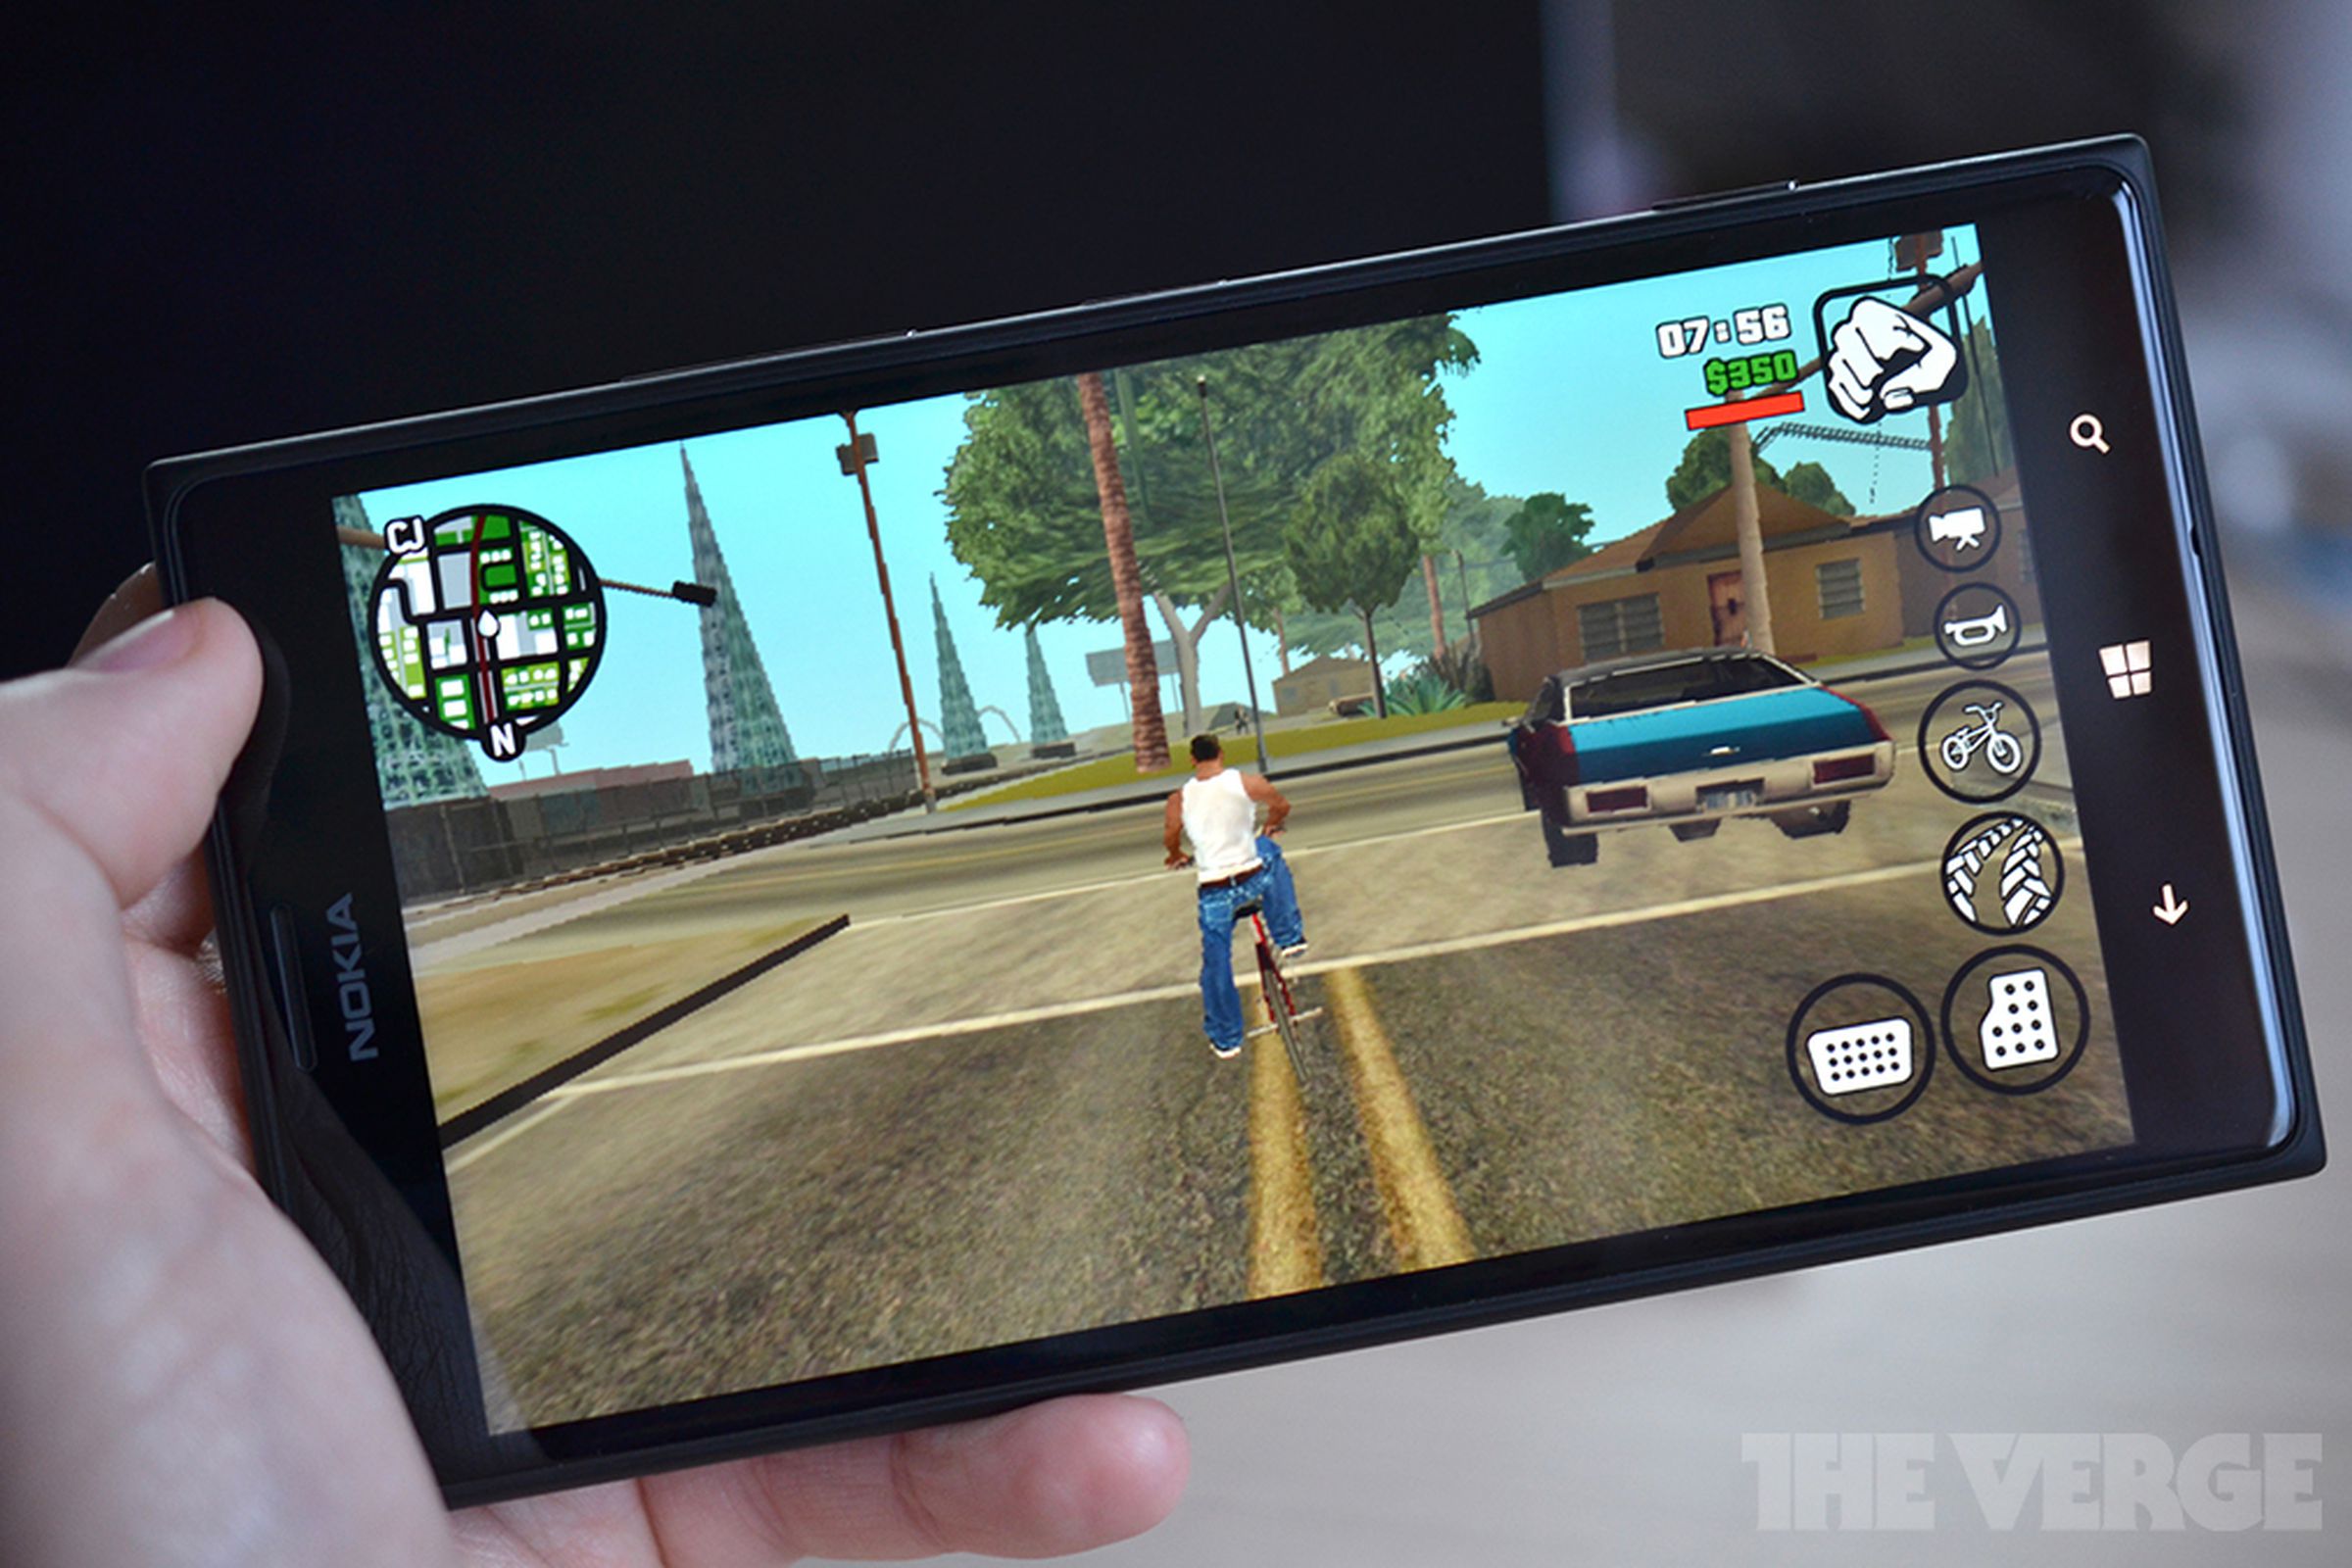 Grand Theft Auto San Andreas Windows Phone